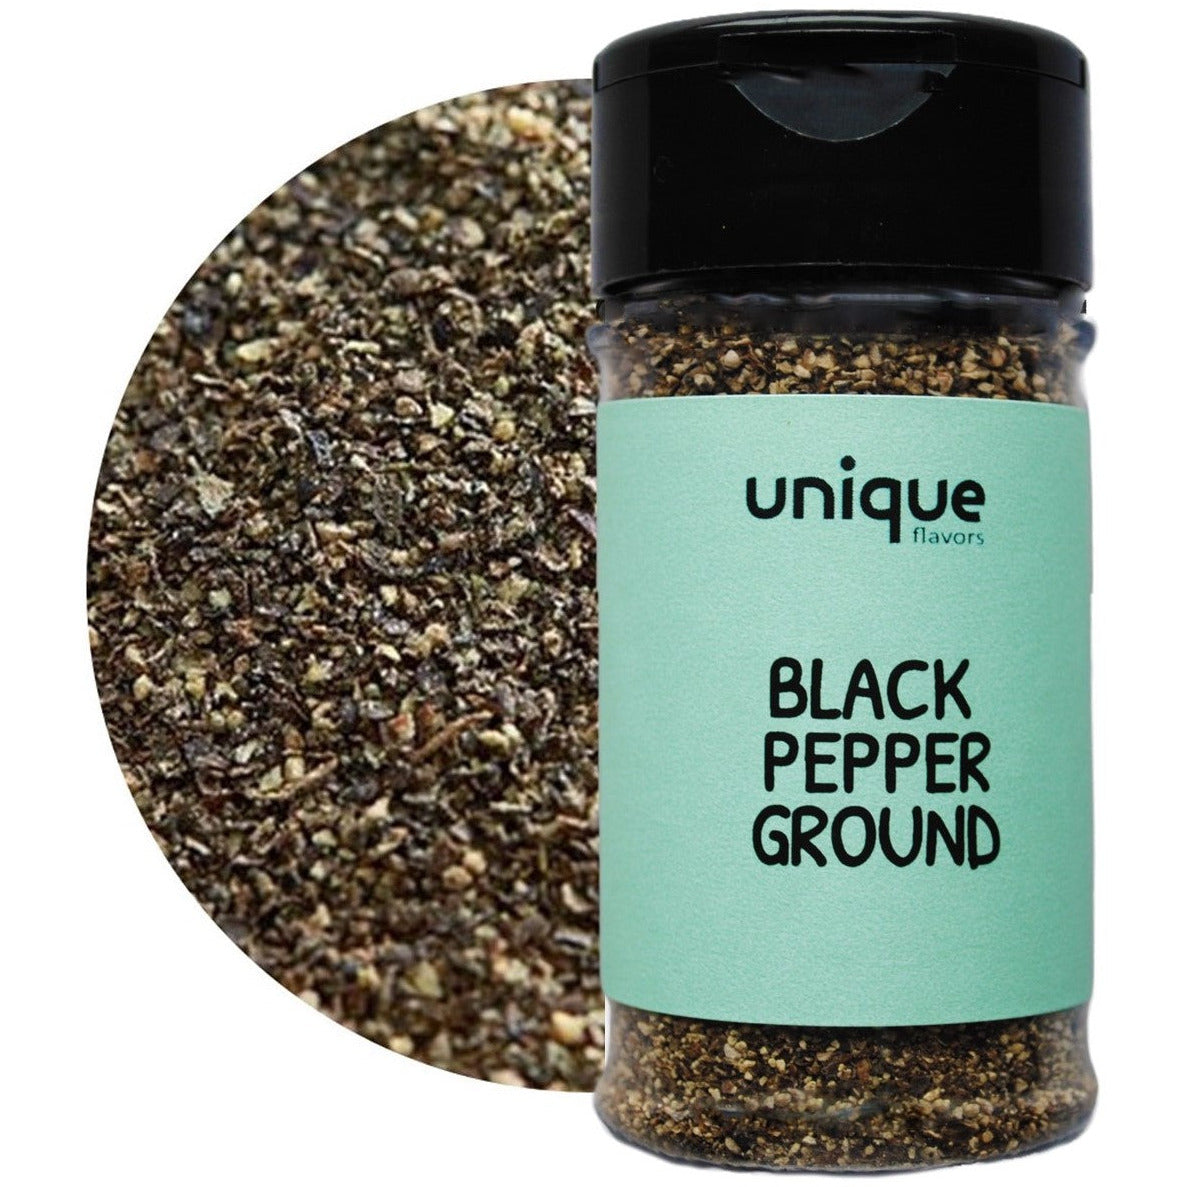 Black Pepper Coarse Ground 1.7oz Easy Shaker - Unique Flavors Spices Unique Flavors LLC 